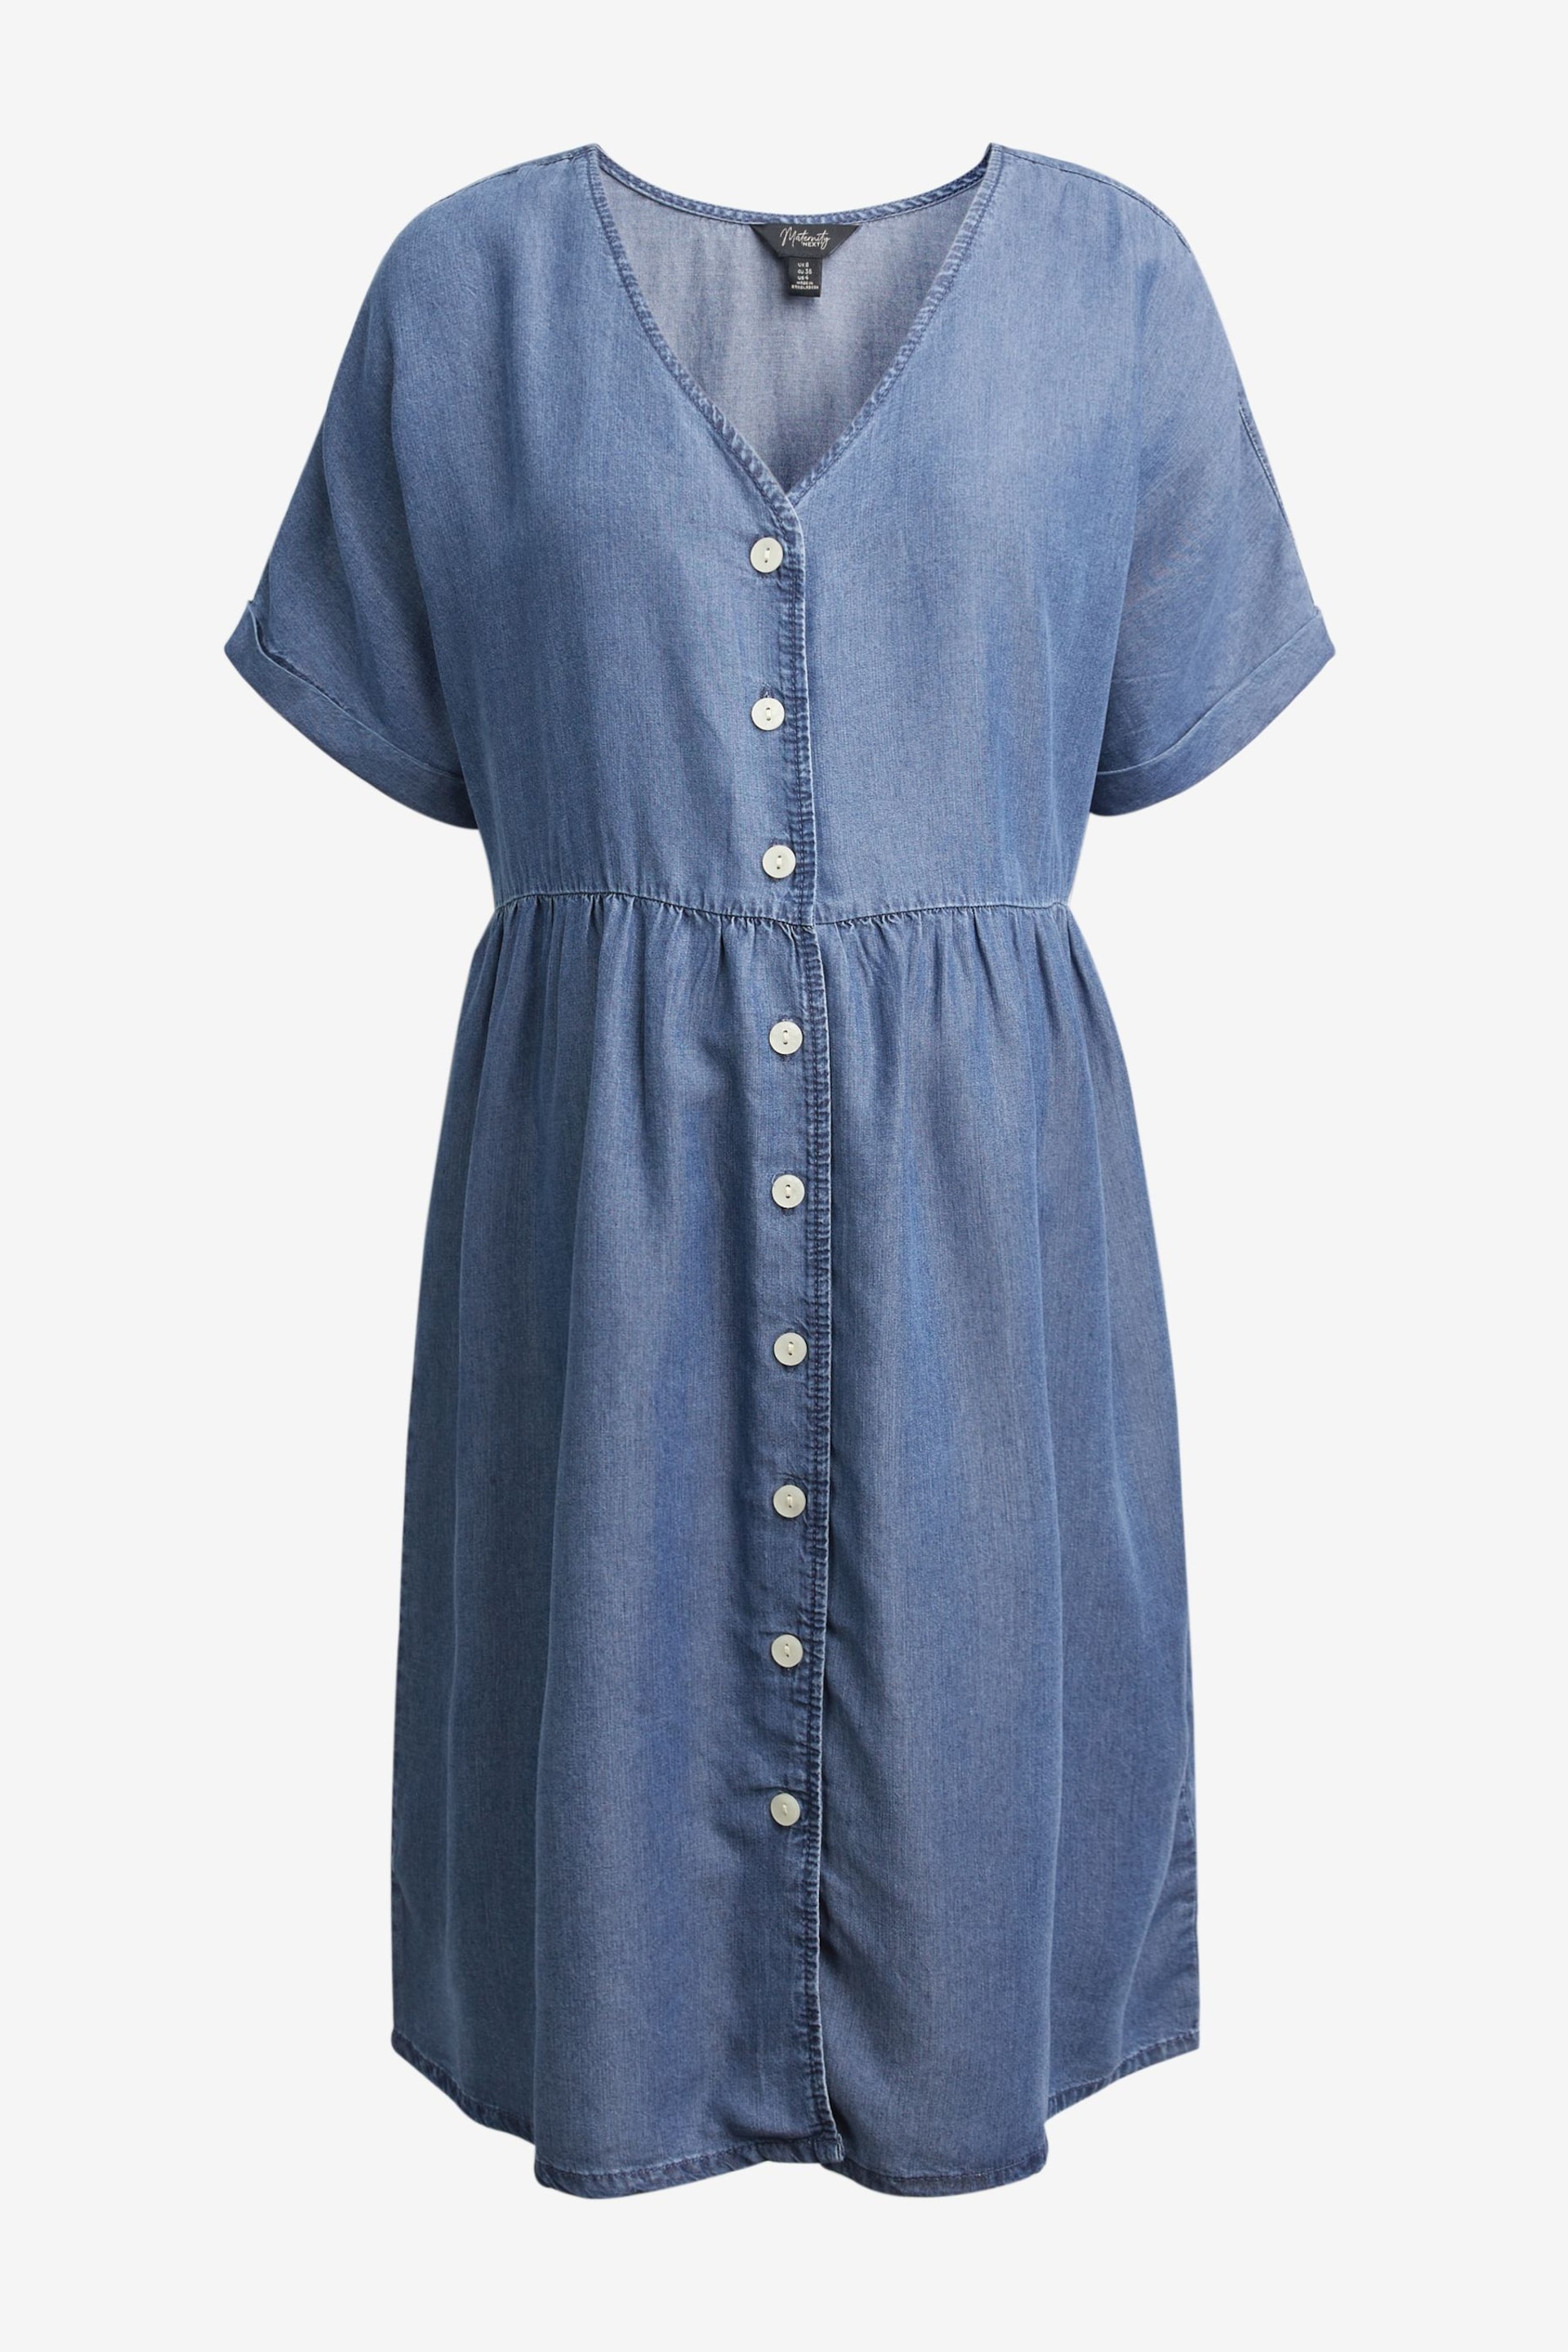 Mid Blue Maternity Denim Dress - Image 6 of 7